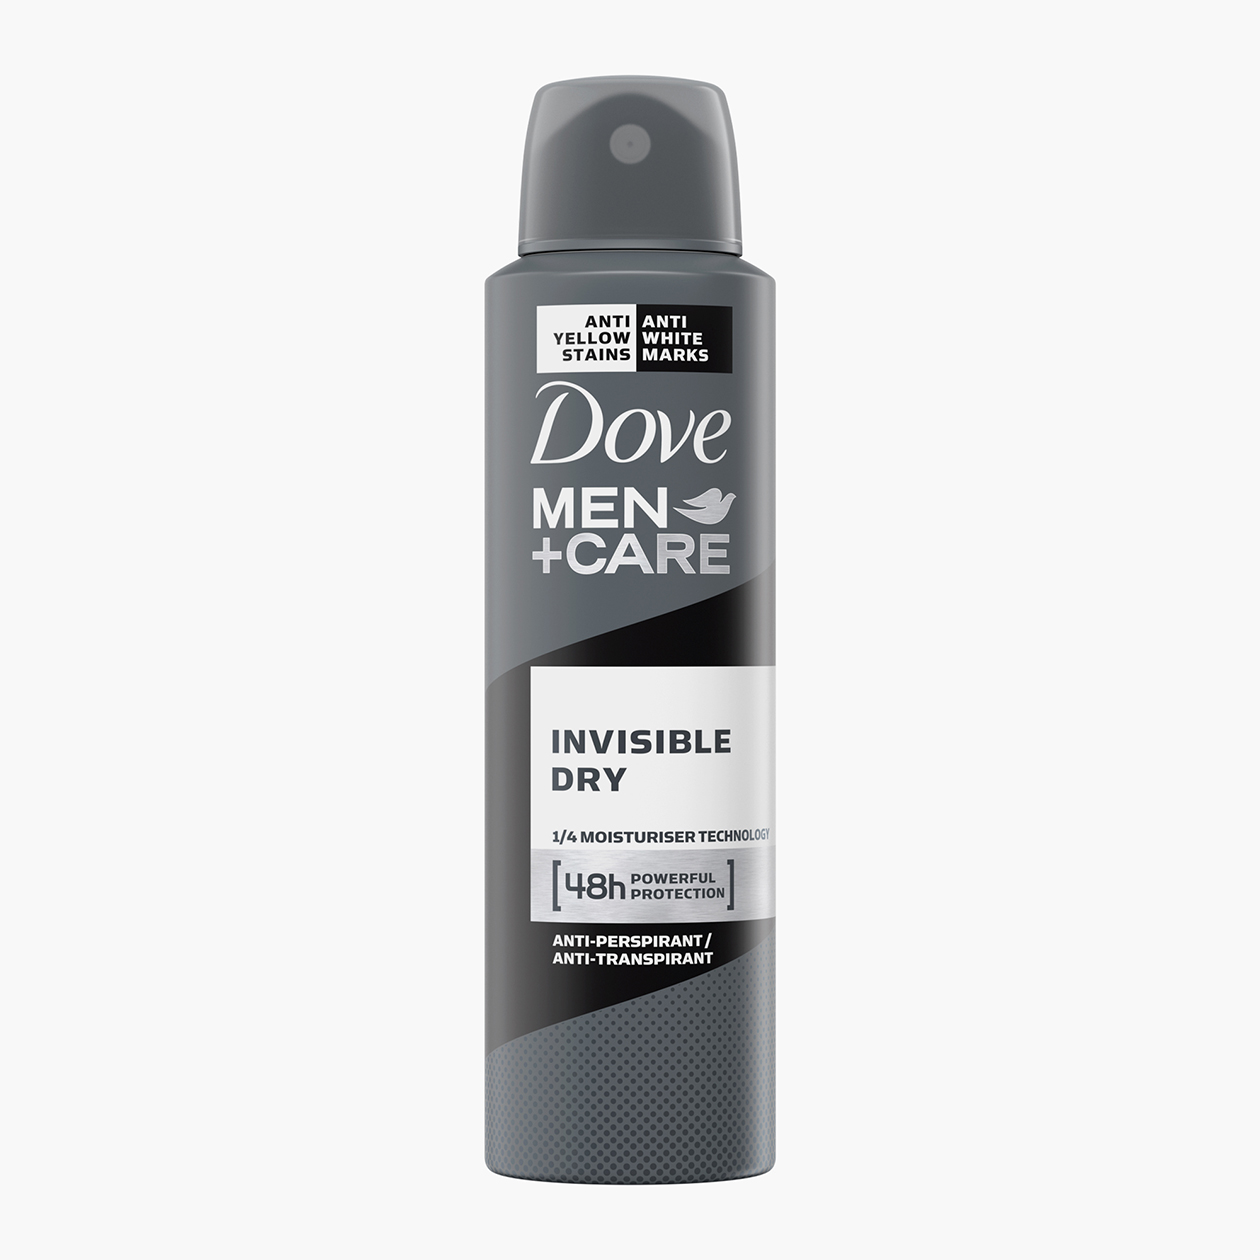 Дезодорант Dove Men + Care Apa Invisible Dry